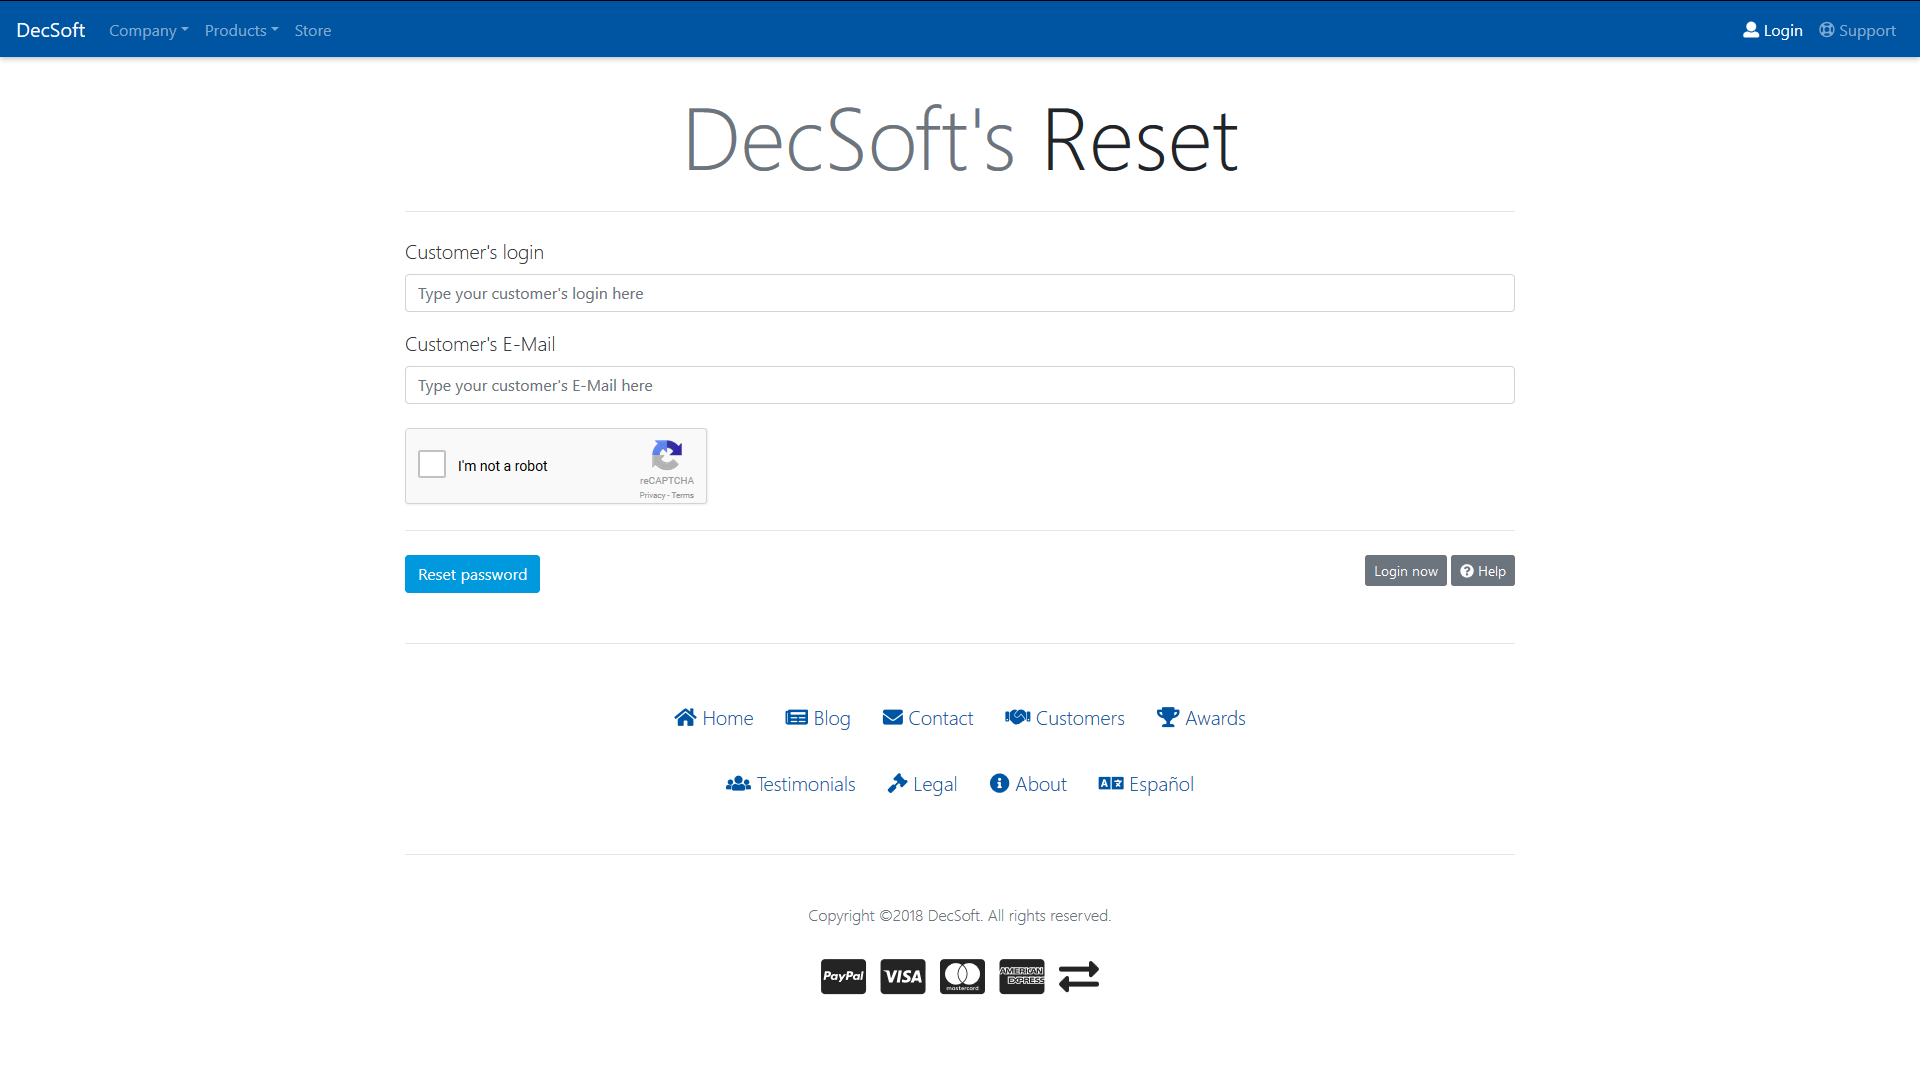 The DecSoft customer login form